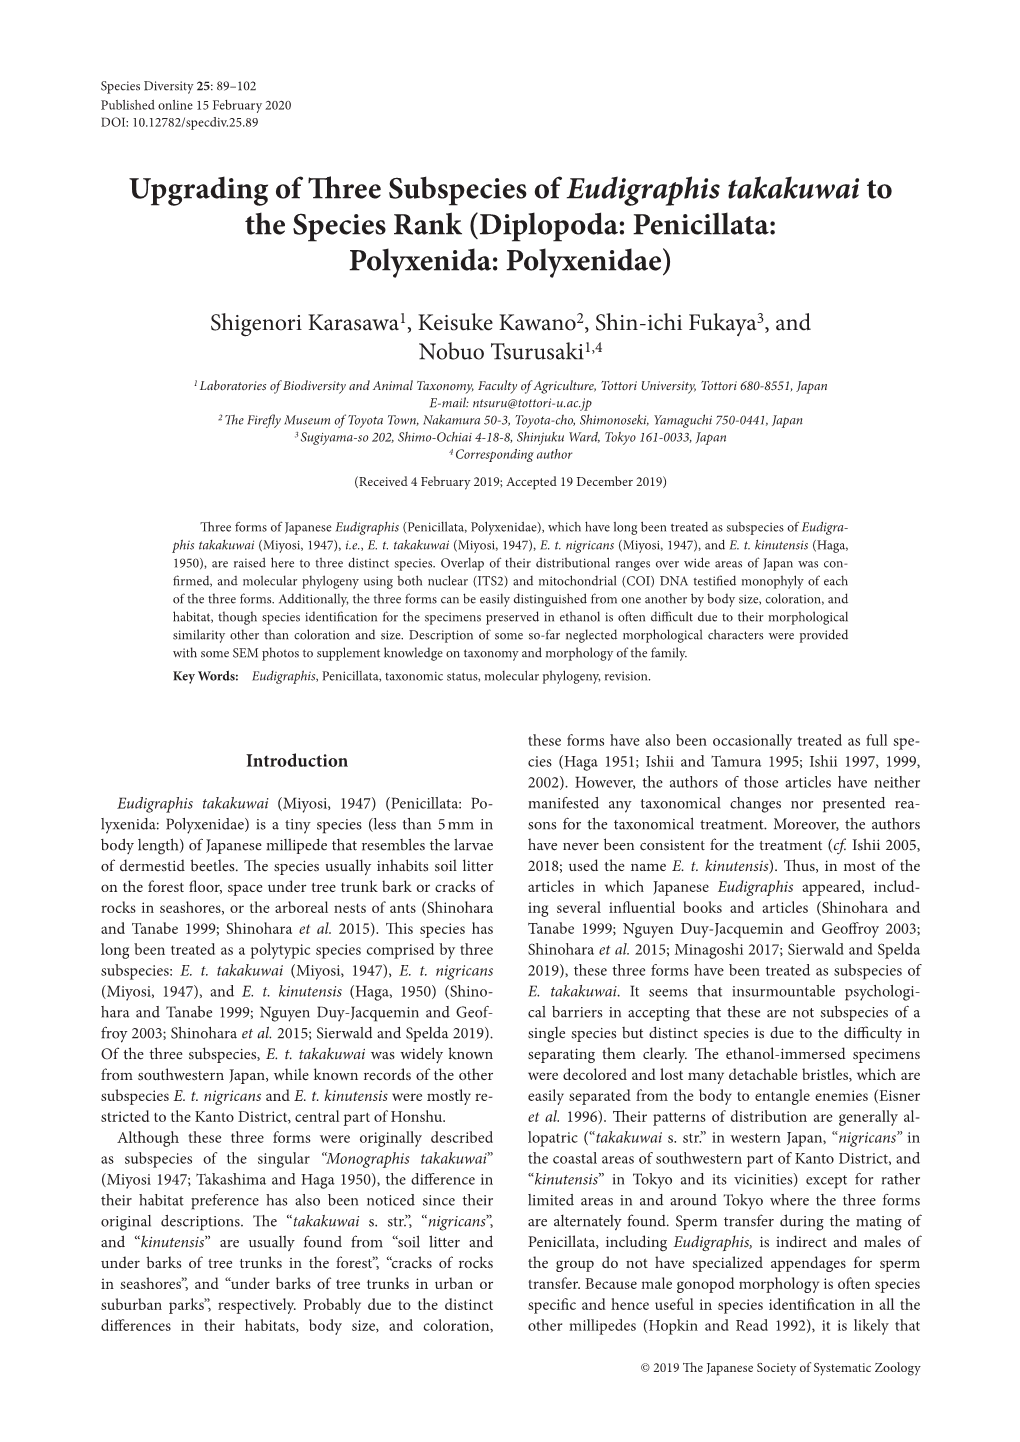 Upgrading of Three Subspecies of Eudigraphis Takakuwai to the Species Rank (Diplopoda: Penicillata: Polyxenida: Polyxenidae)